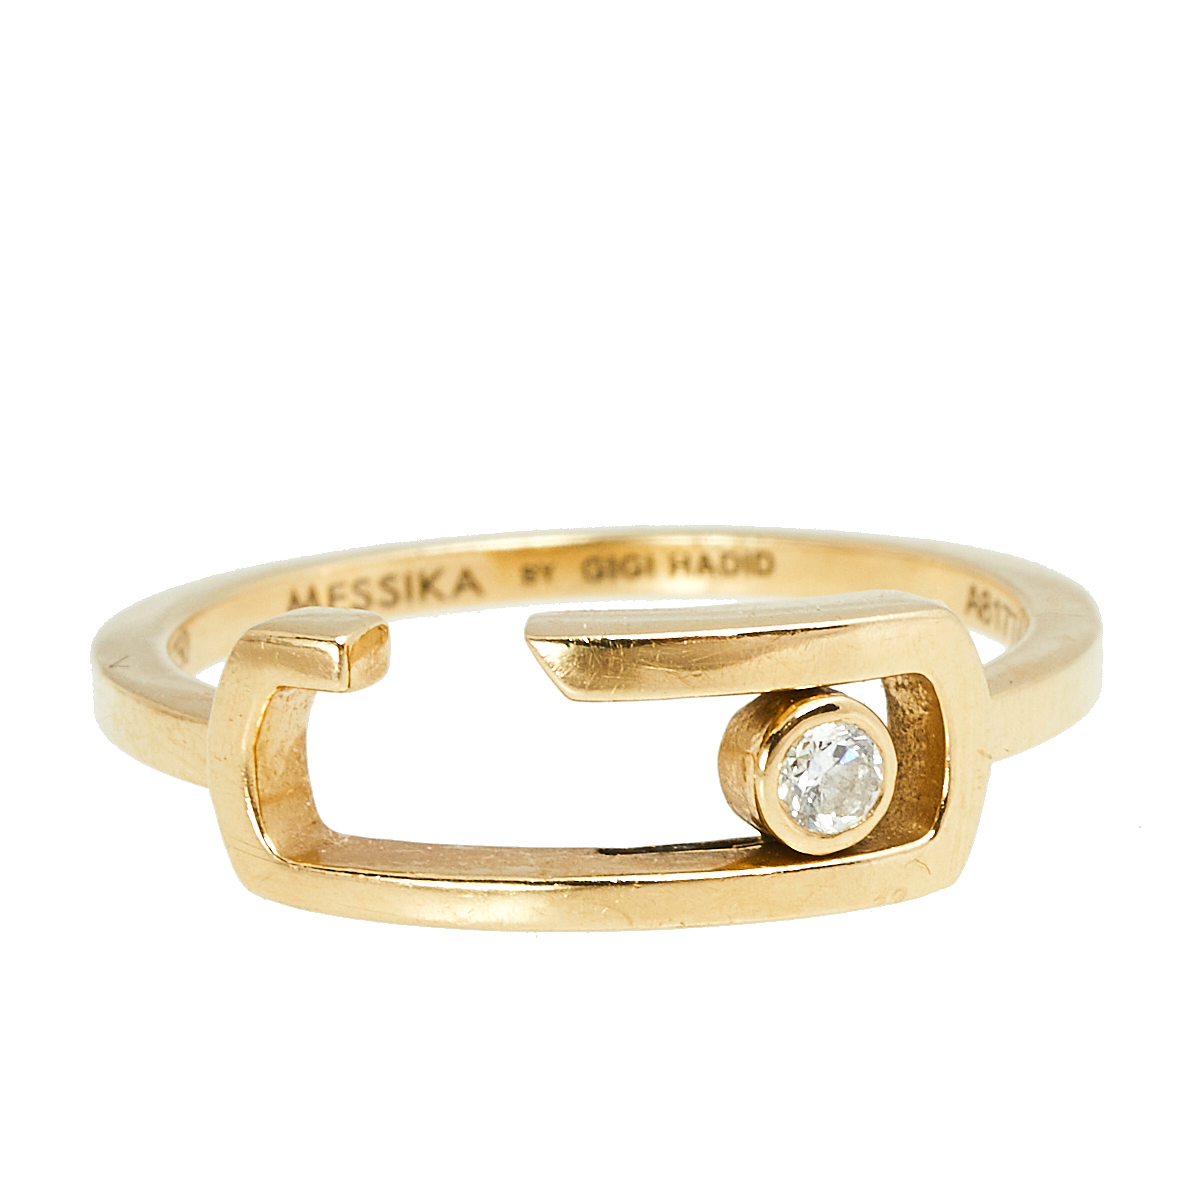 

Messika By Gigi Hadid Move Addiction Diamond 18k Rose Gold Ring Size